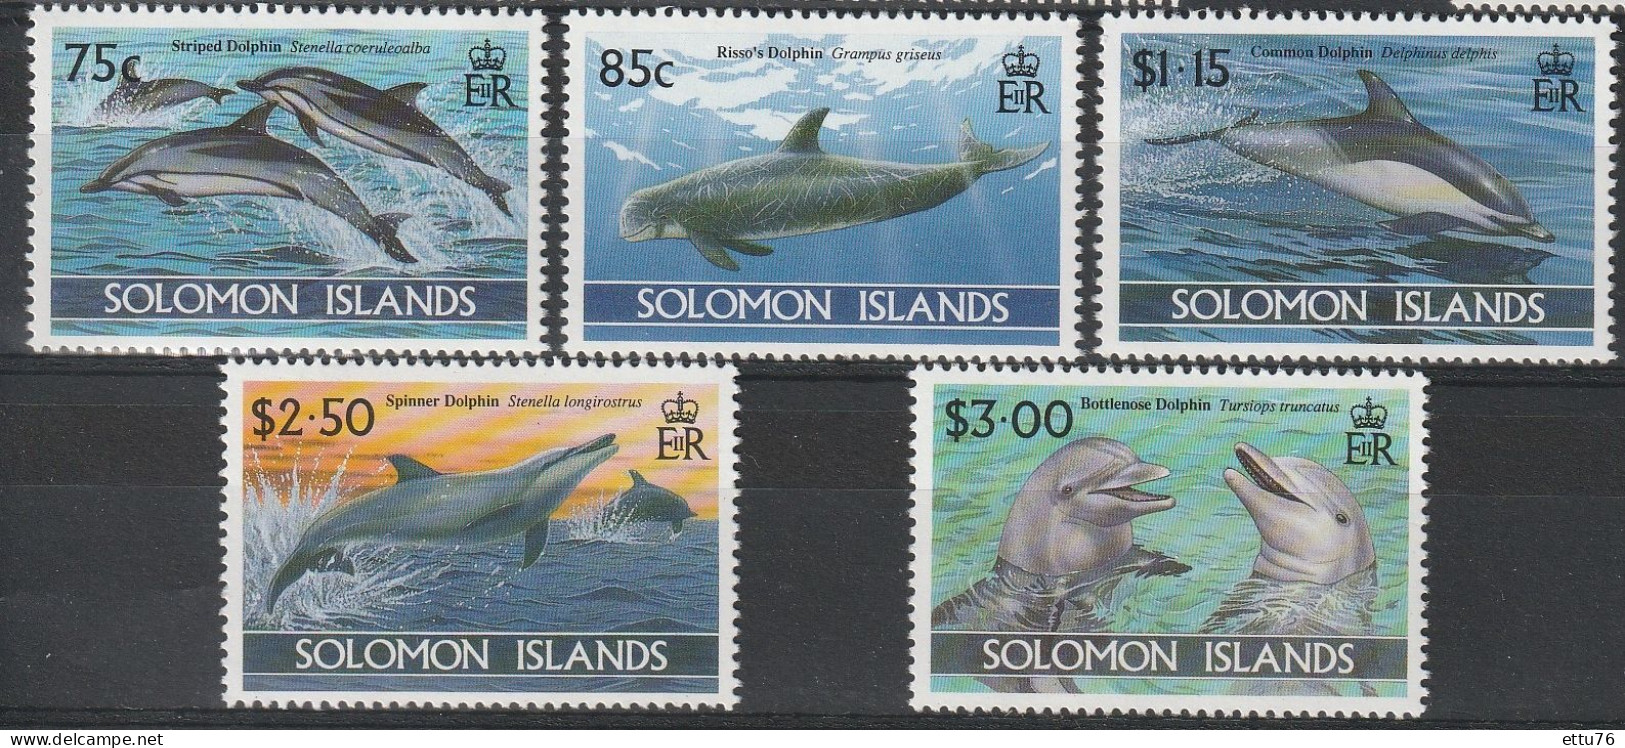 Solomon Islands 1994  Dolphins  Set  MNH - Dauphins